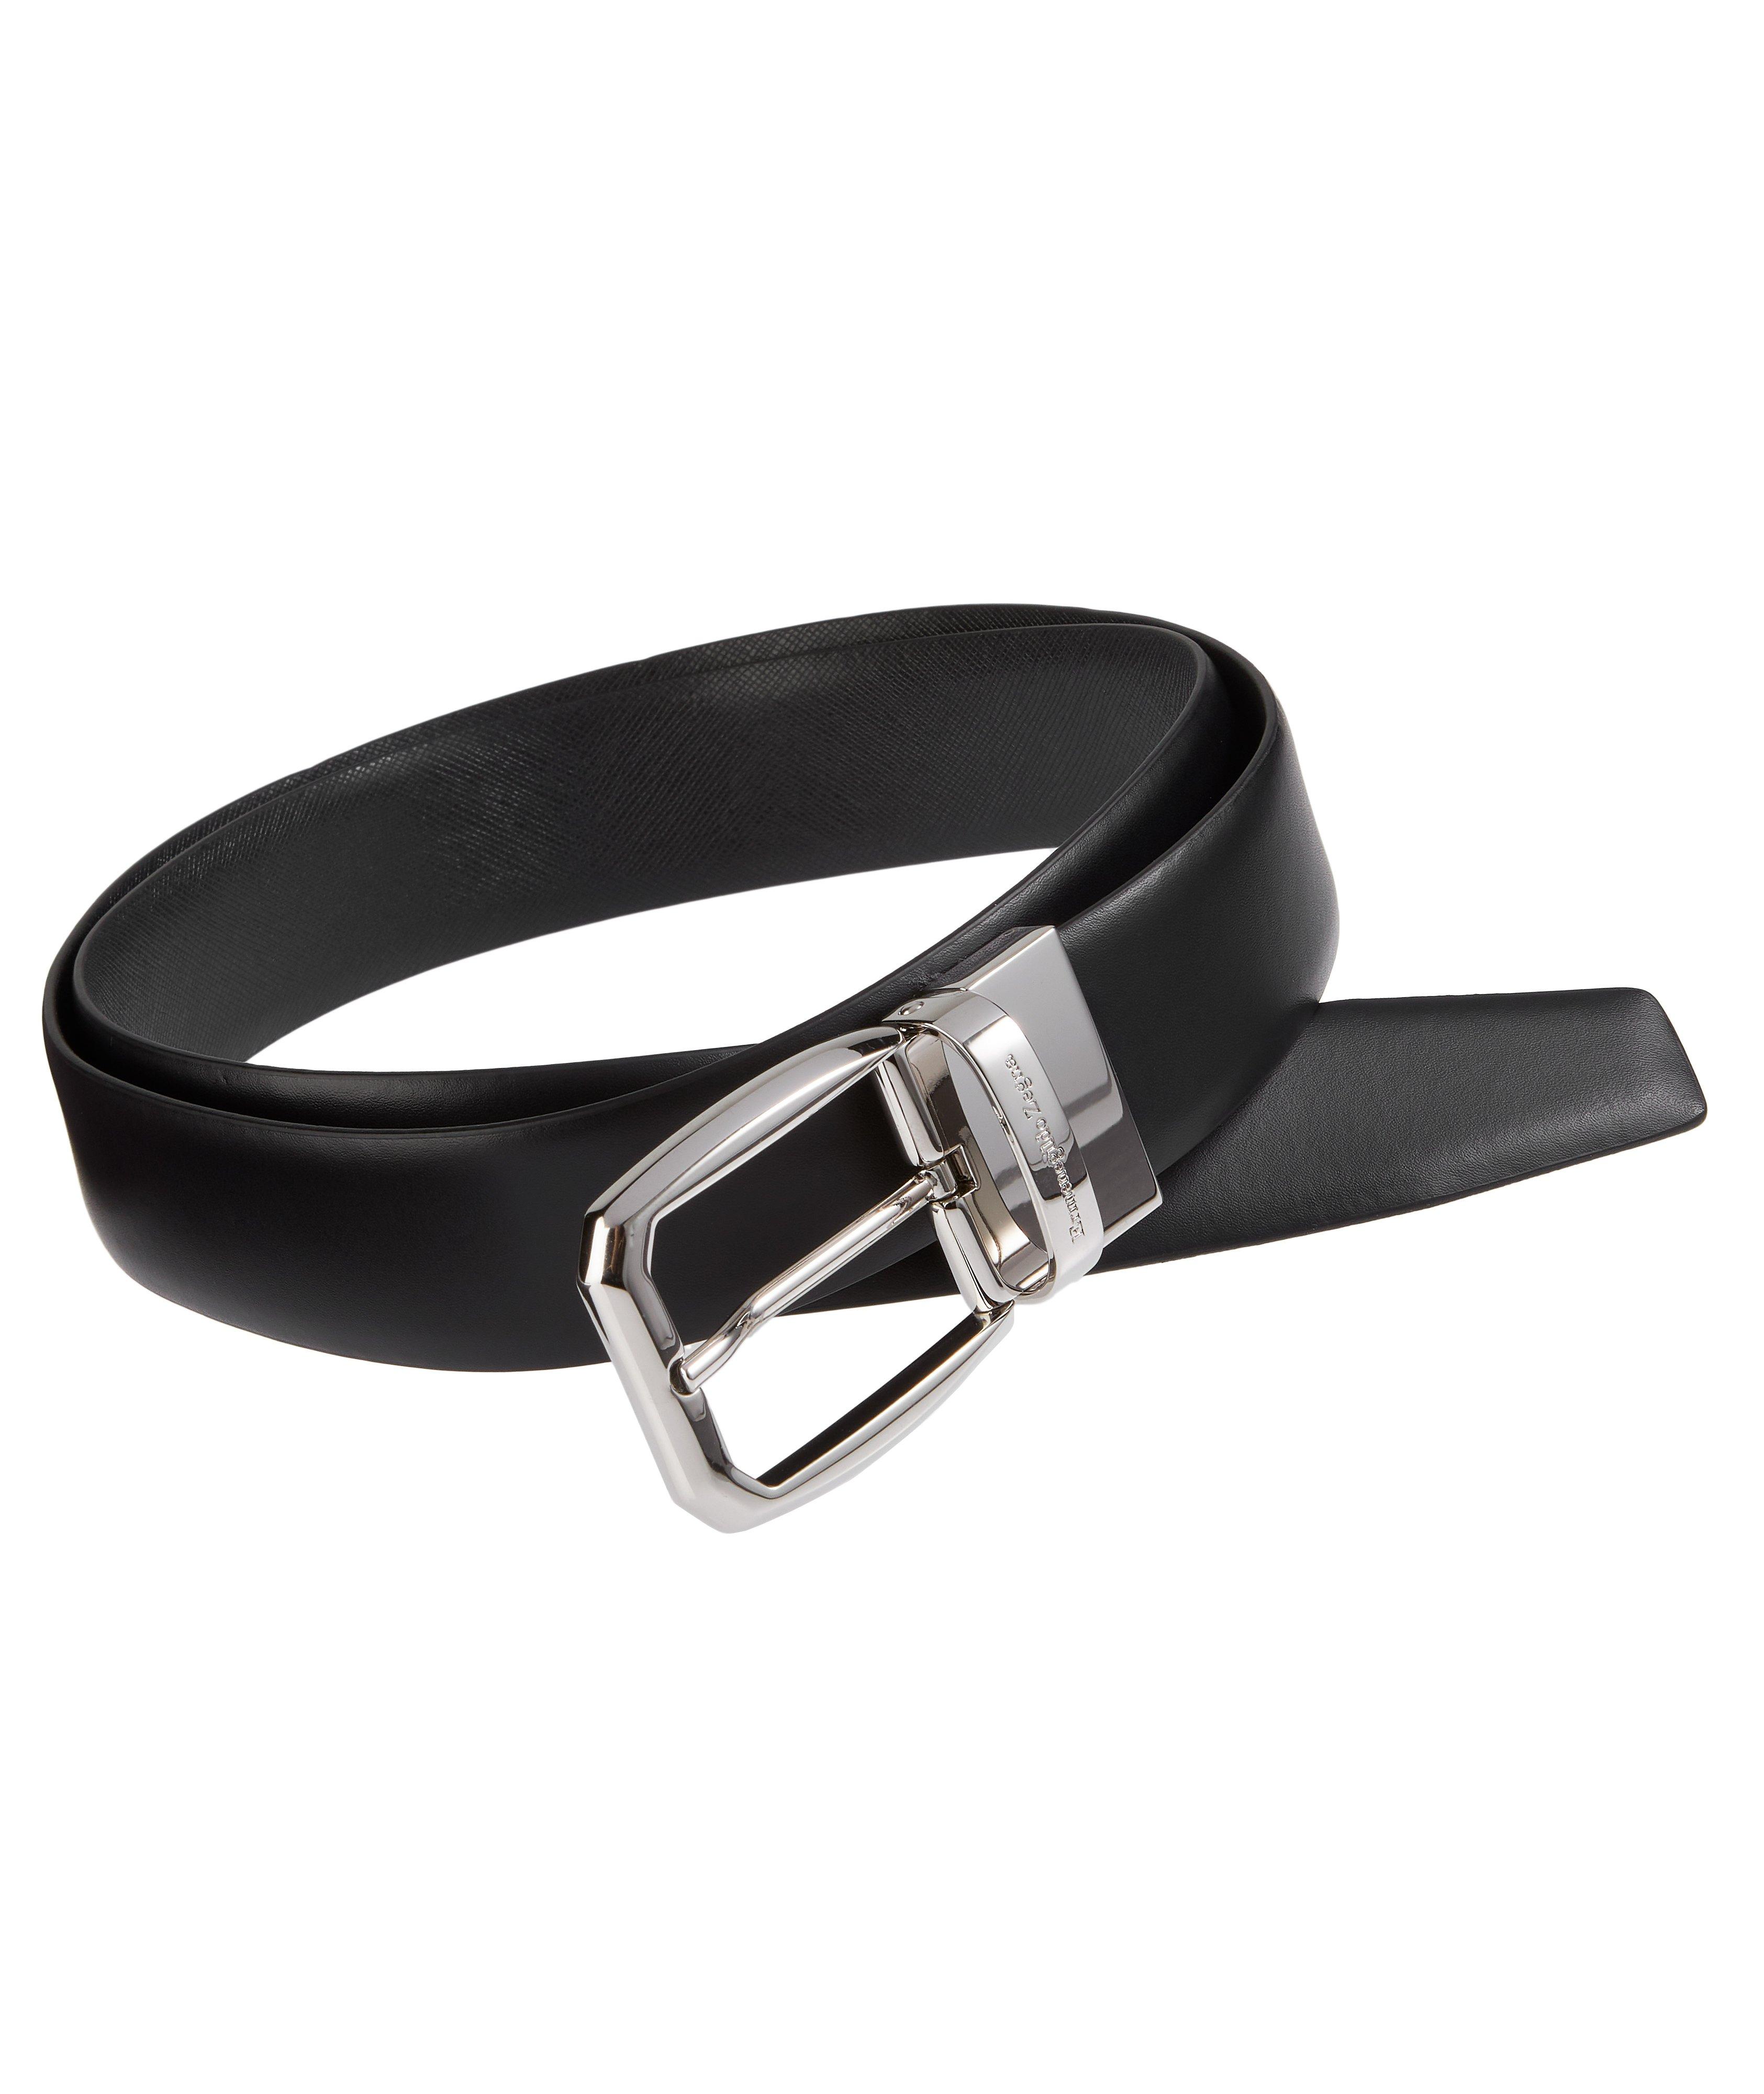 Harry Rosen Reversible Saffiano Leather Belt. 1